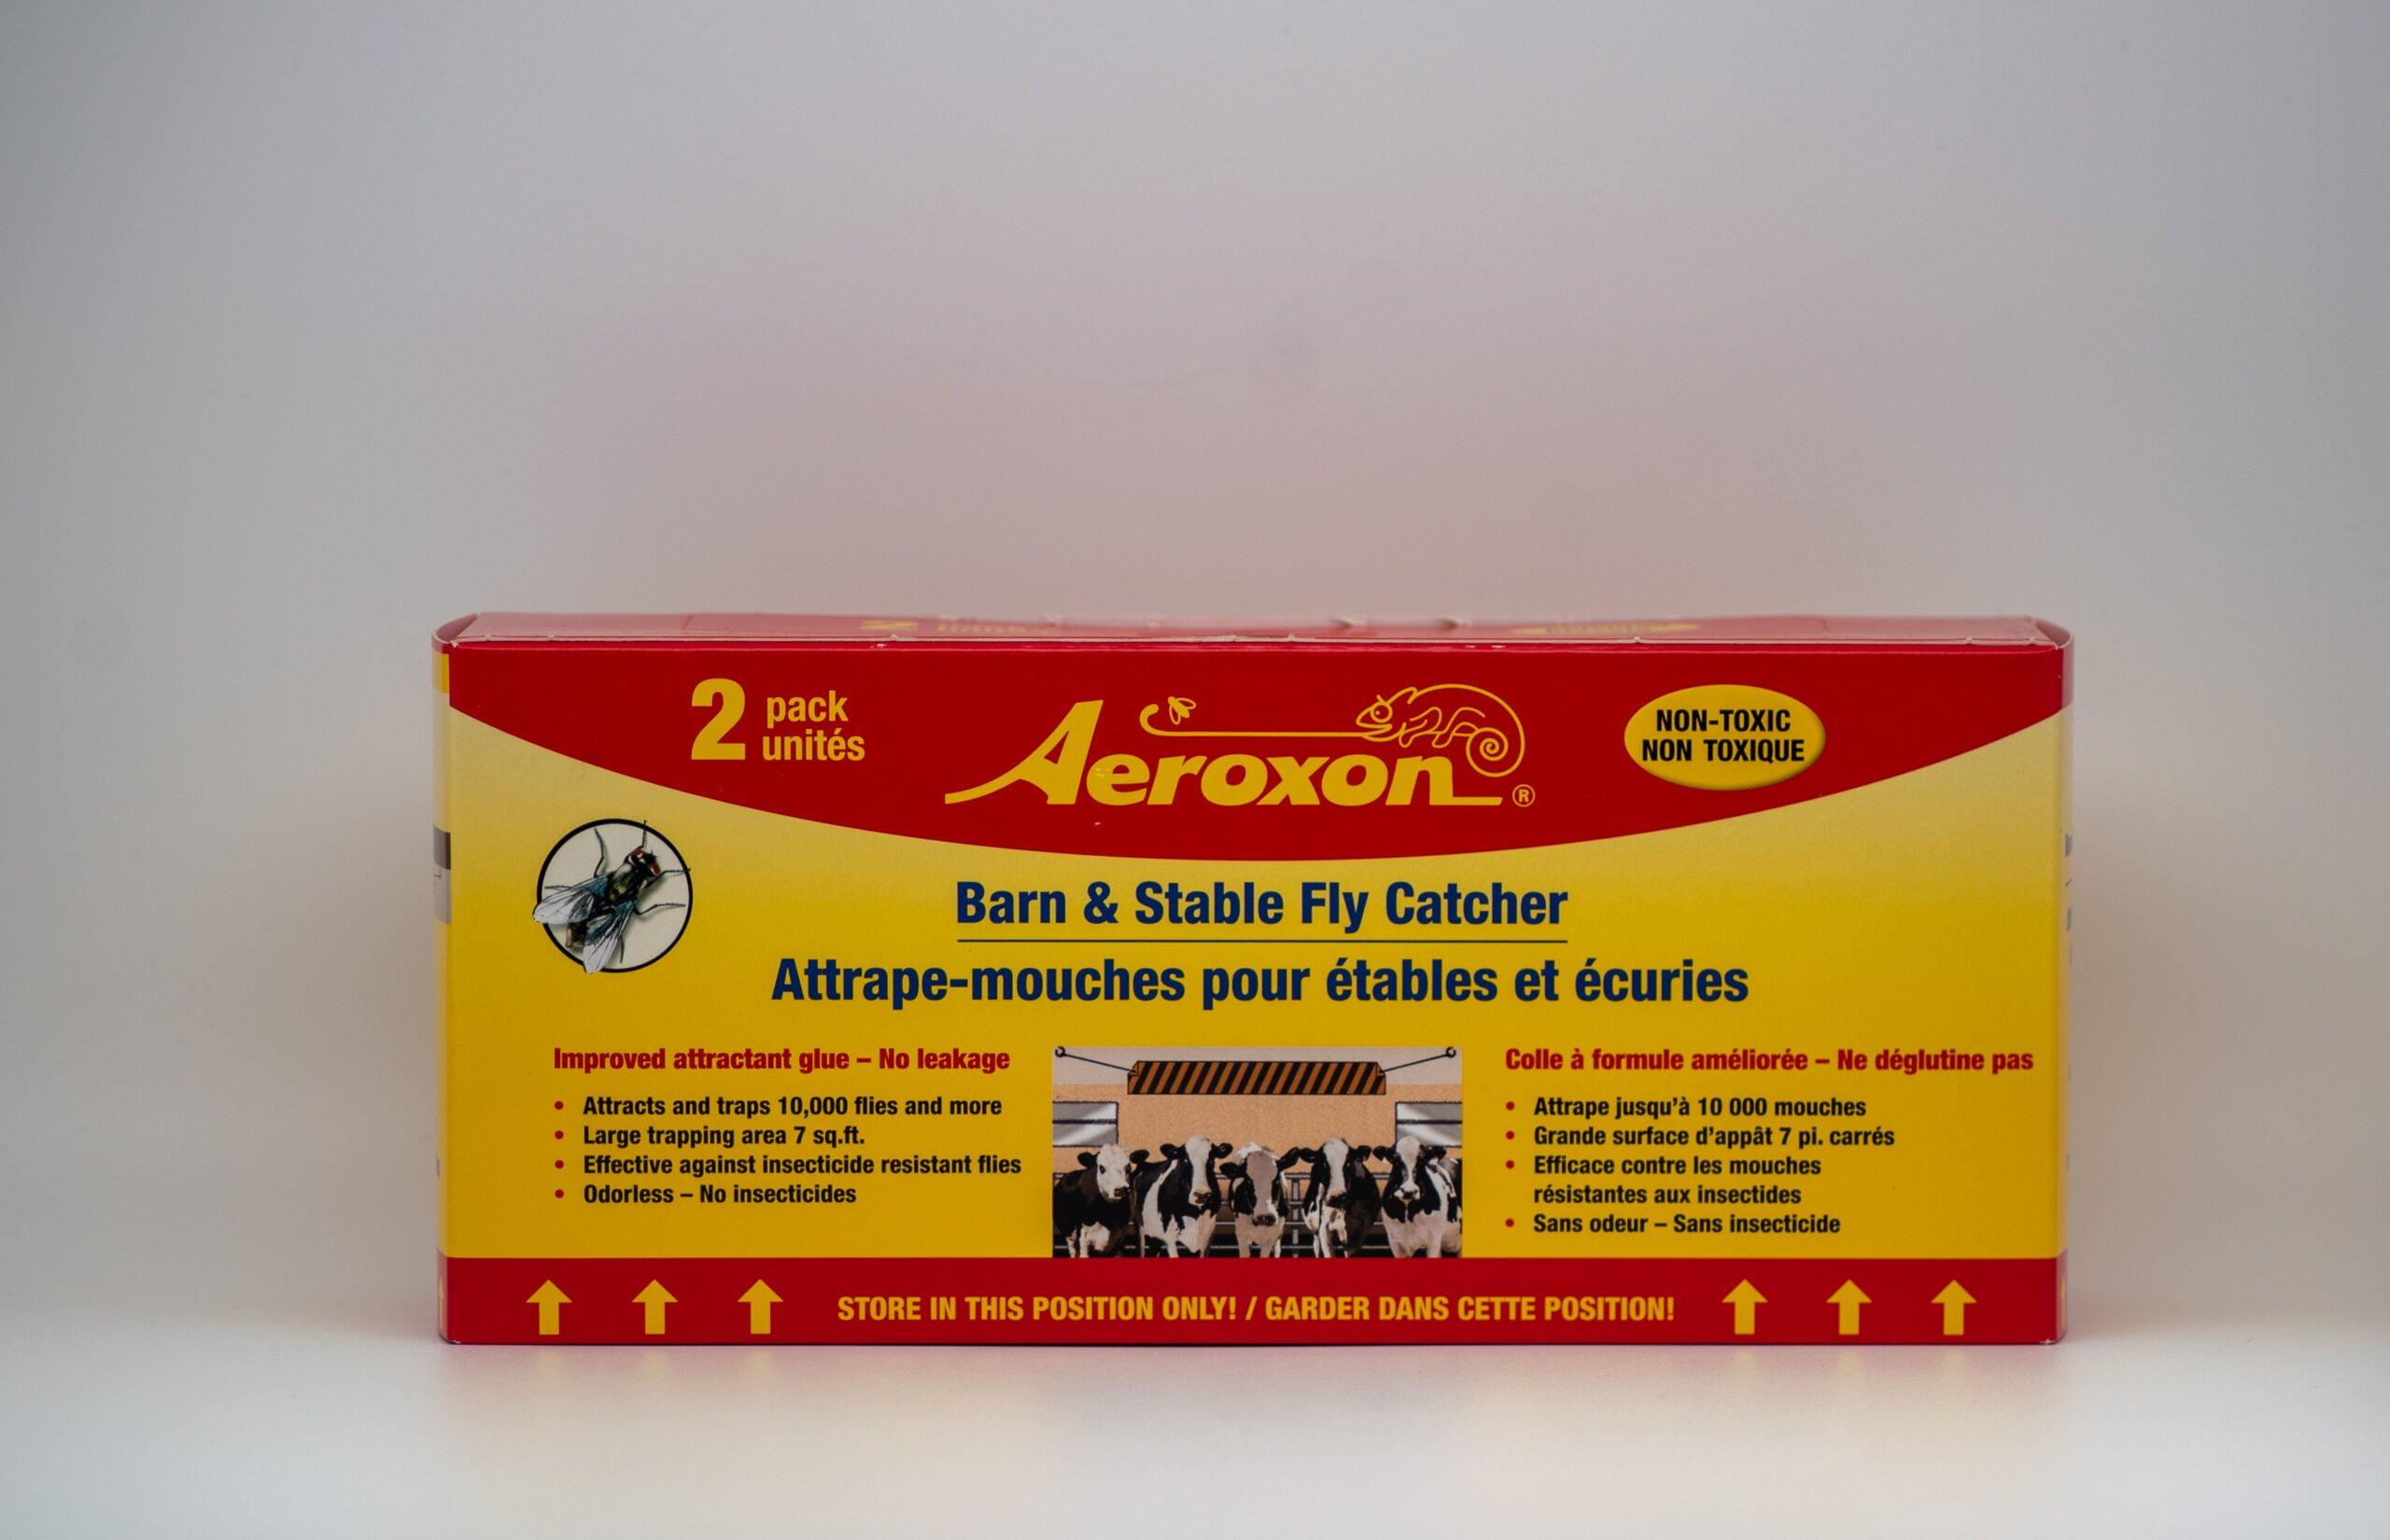 Aeroxon Fly Catchers Pack 4